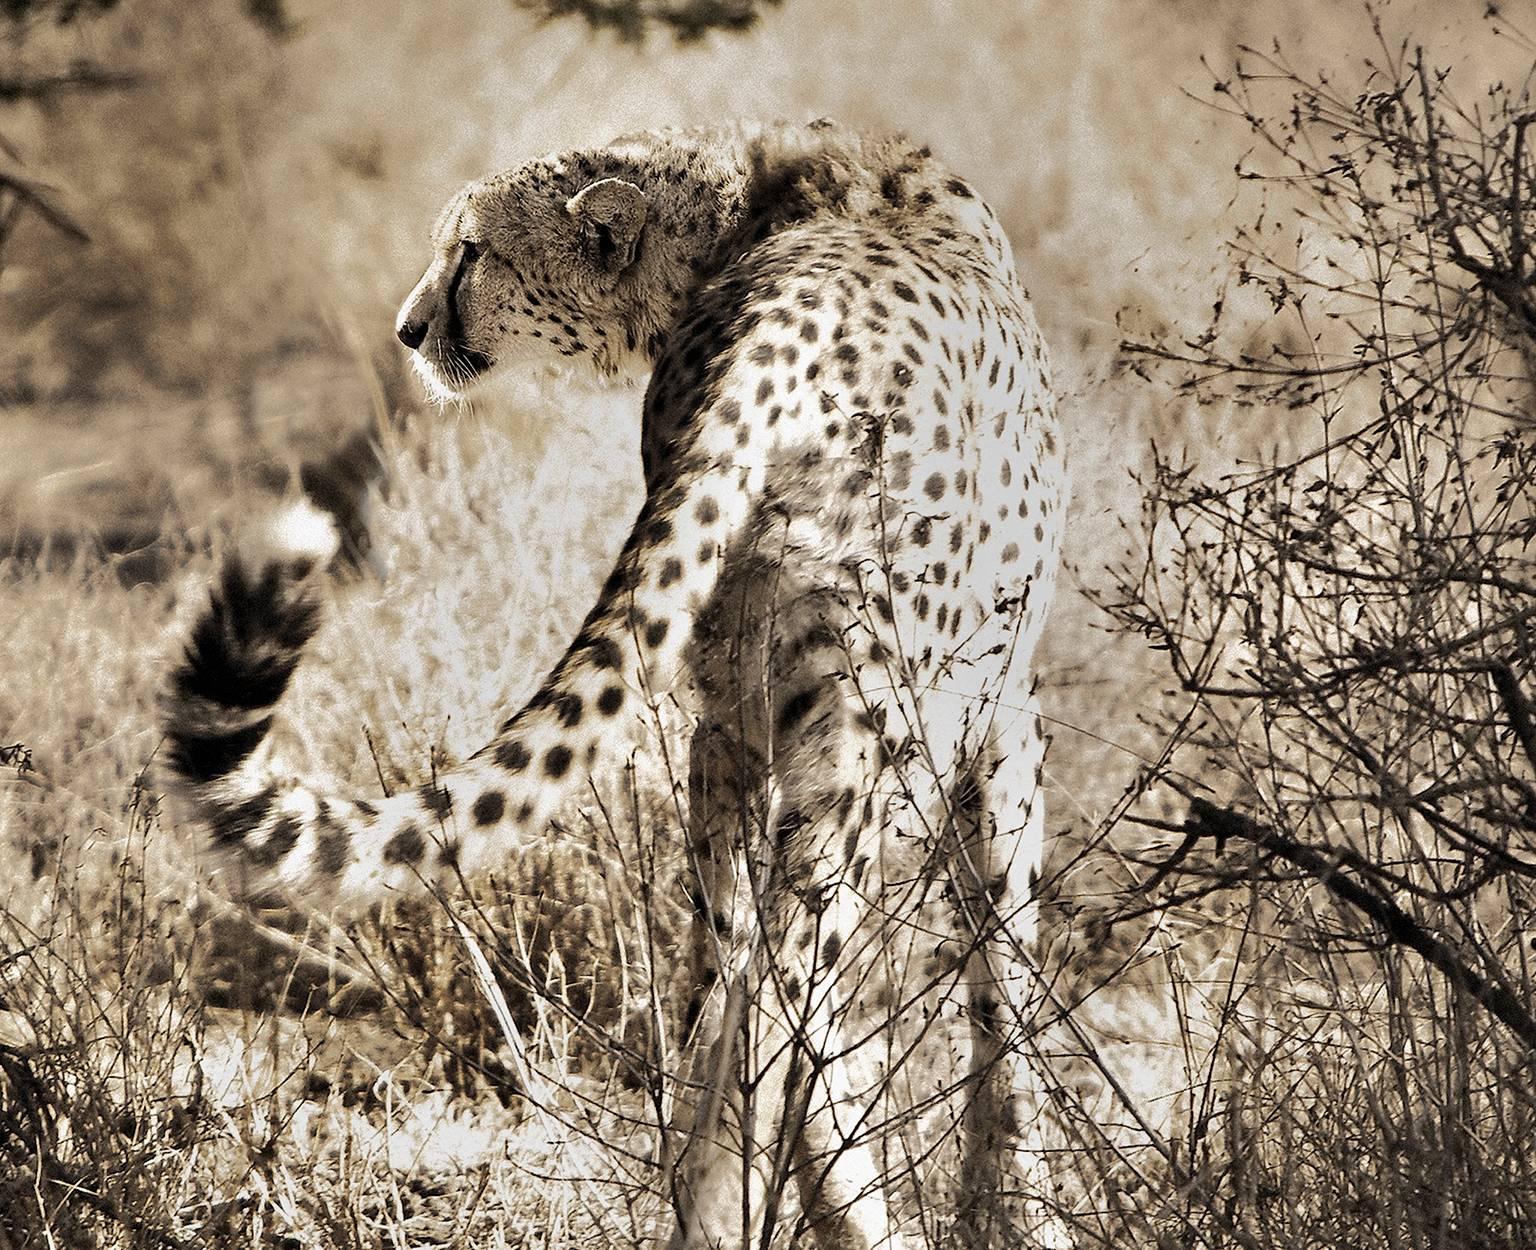 Cheetah No.1 - Photograph by Chris Gordaneer